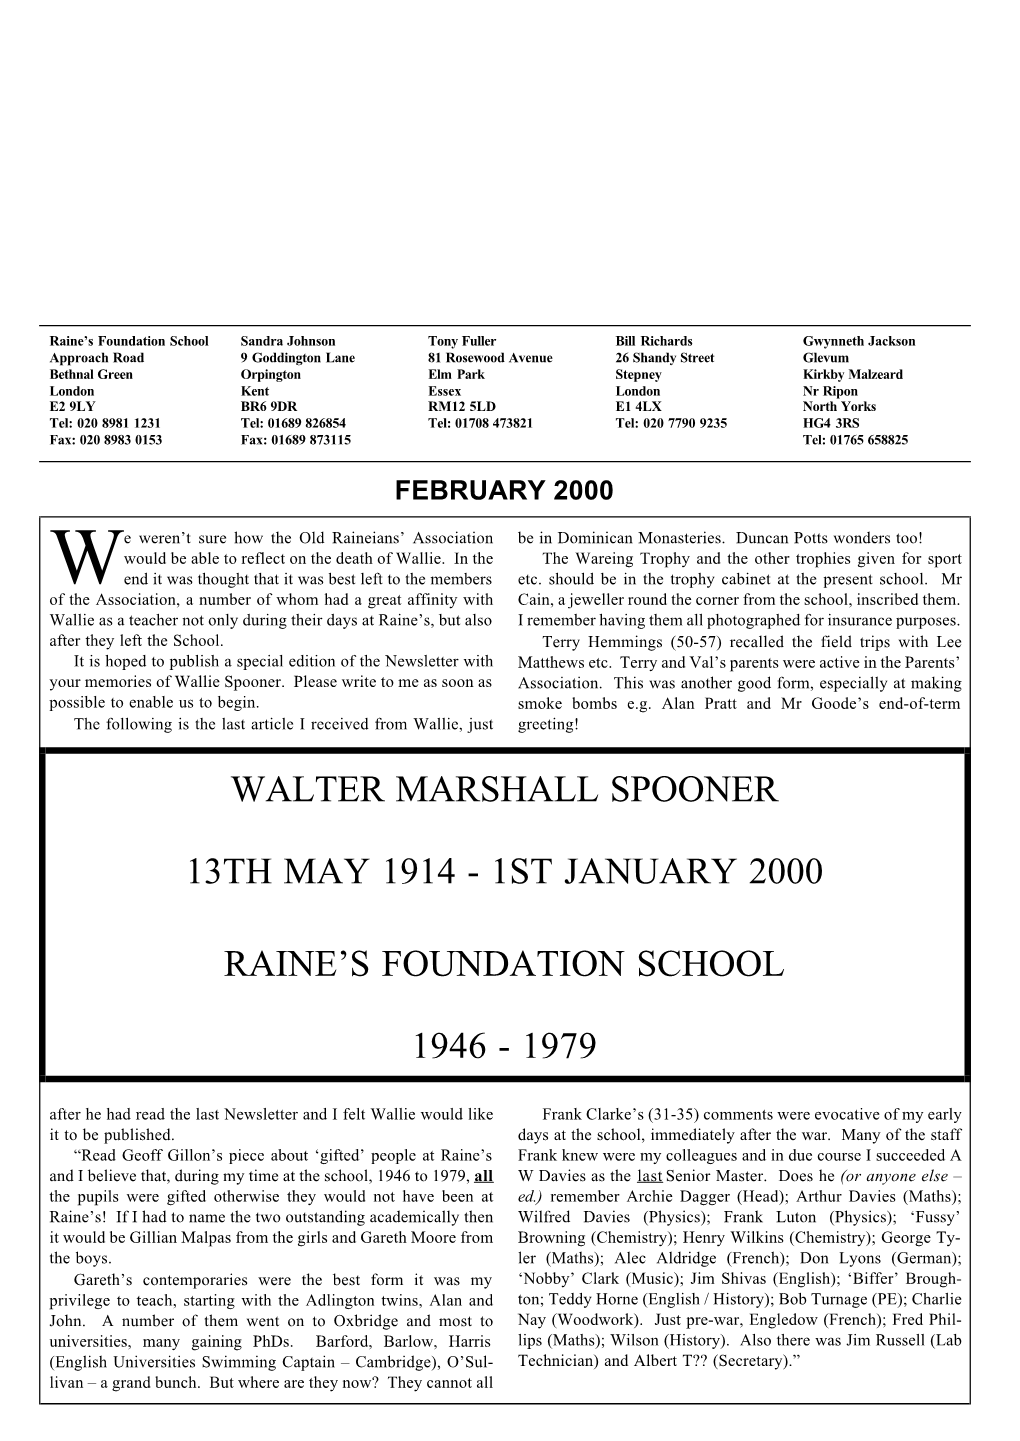 1St January 2000 Raine's Foundation School 1946